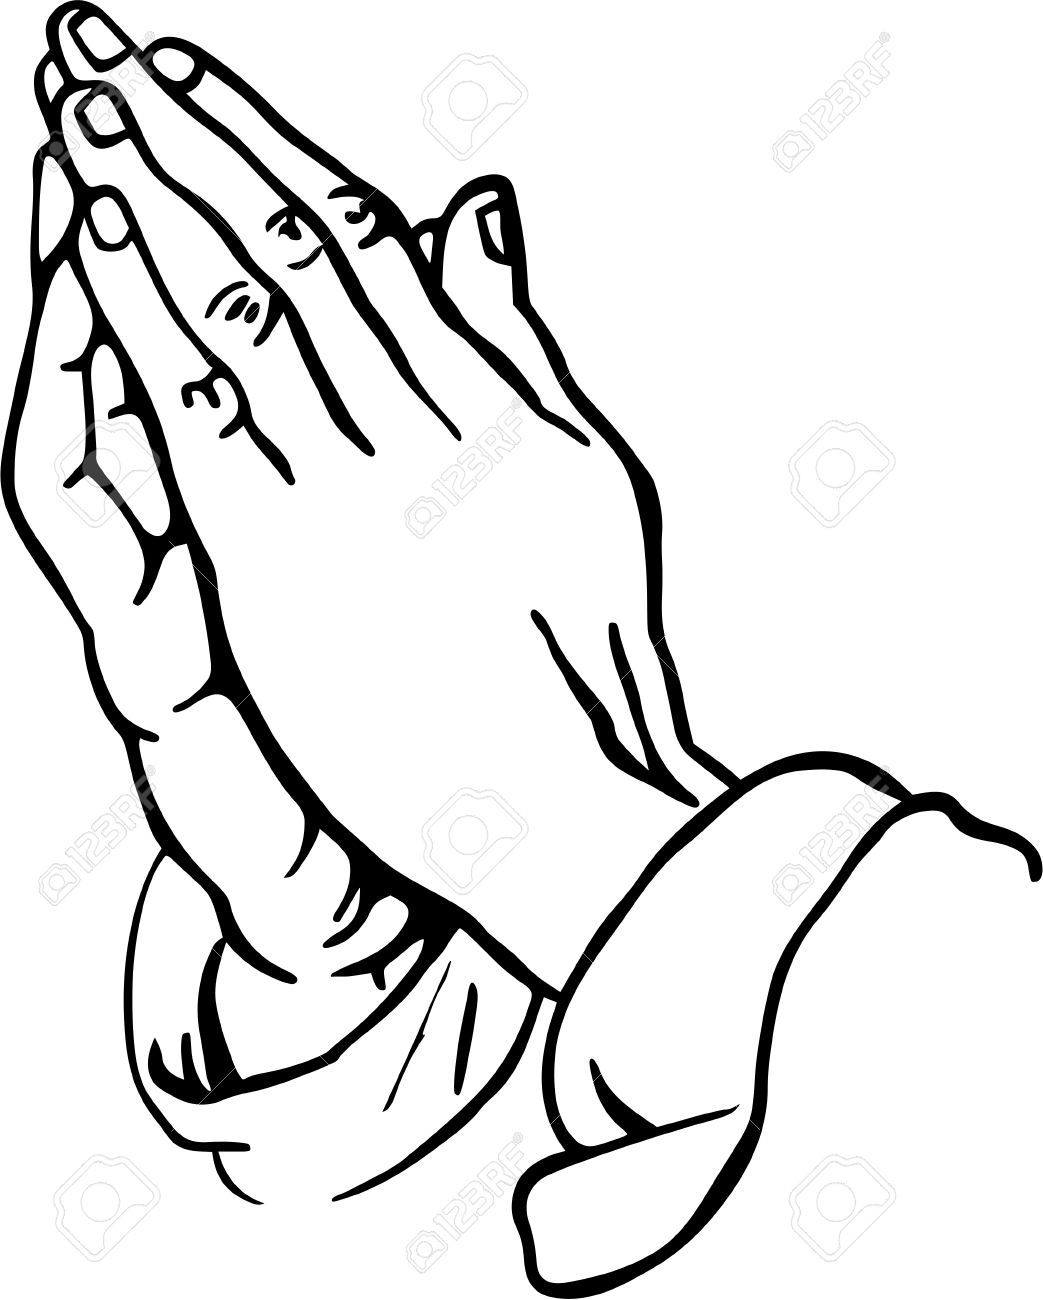 10 Best Image Of Praying Hands FULL HD 1080p For PC Desktop